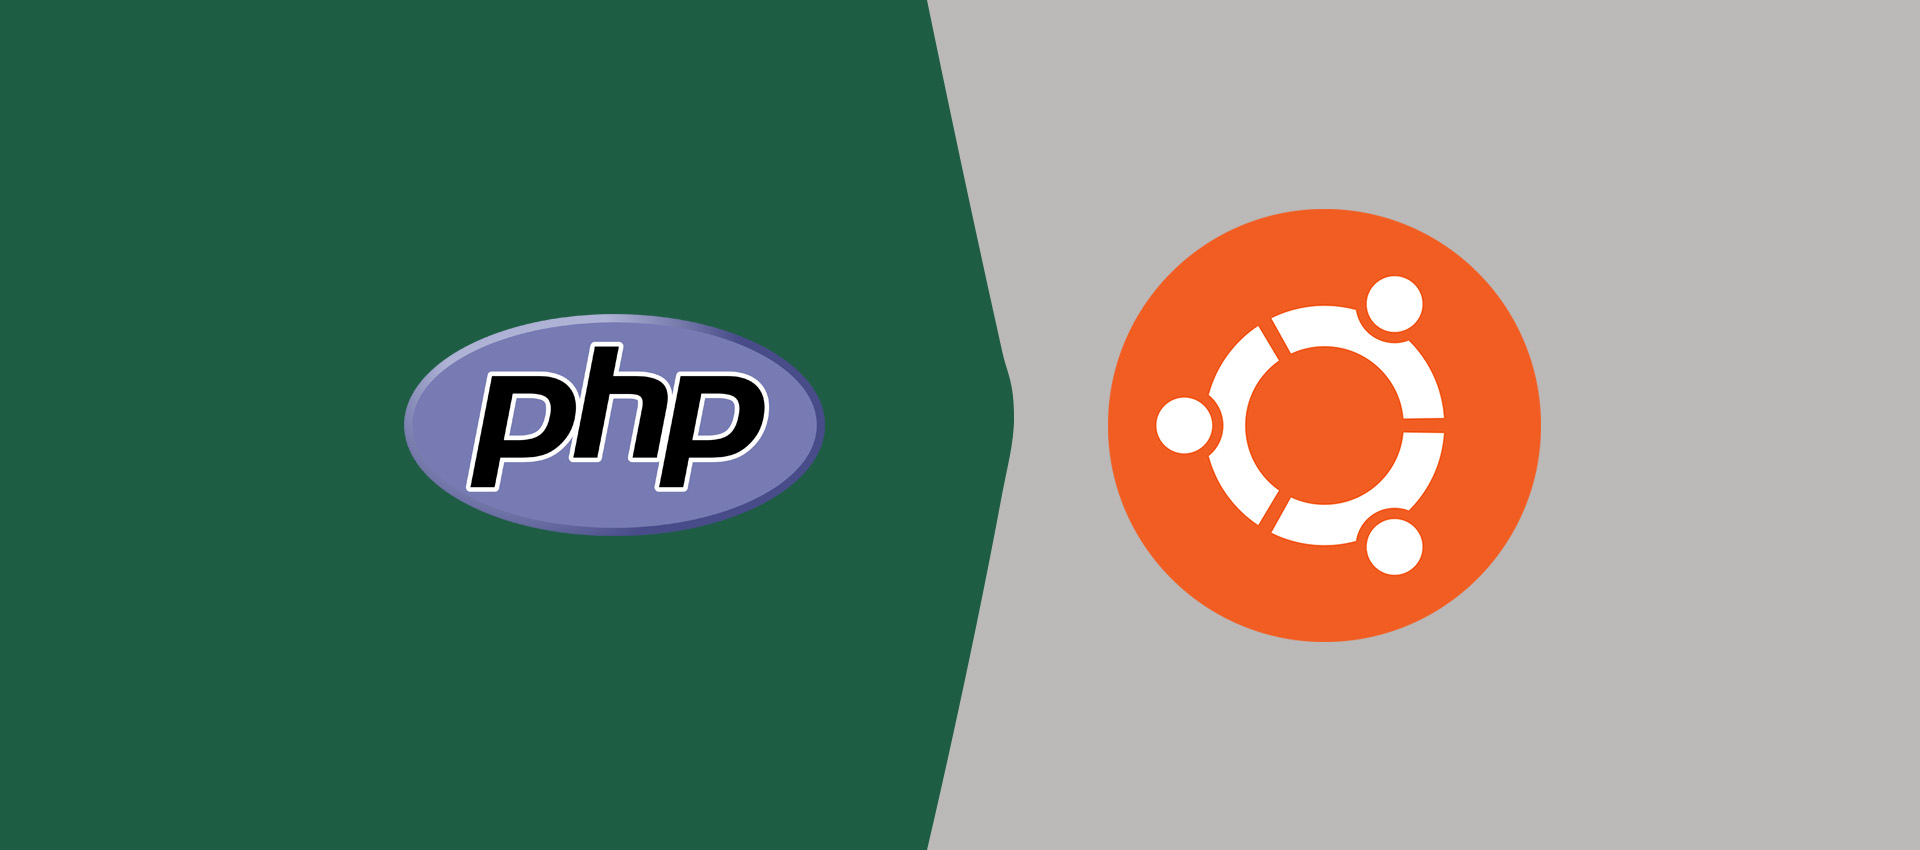 Quagga steno zo veel How To Install PHP 8 On Ubuntu 18.04 LTS | Tutorials24x7